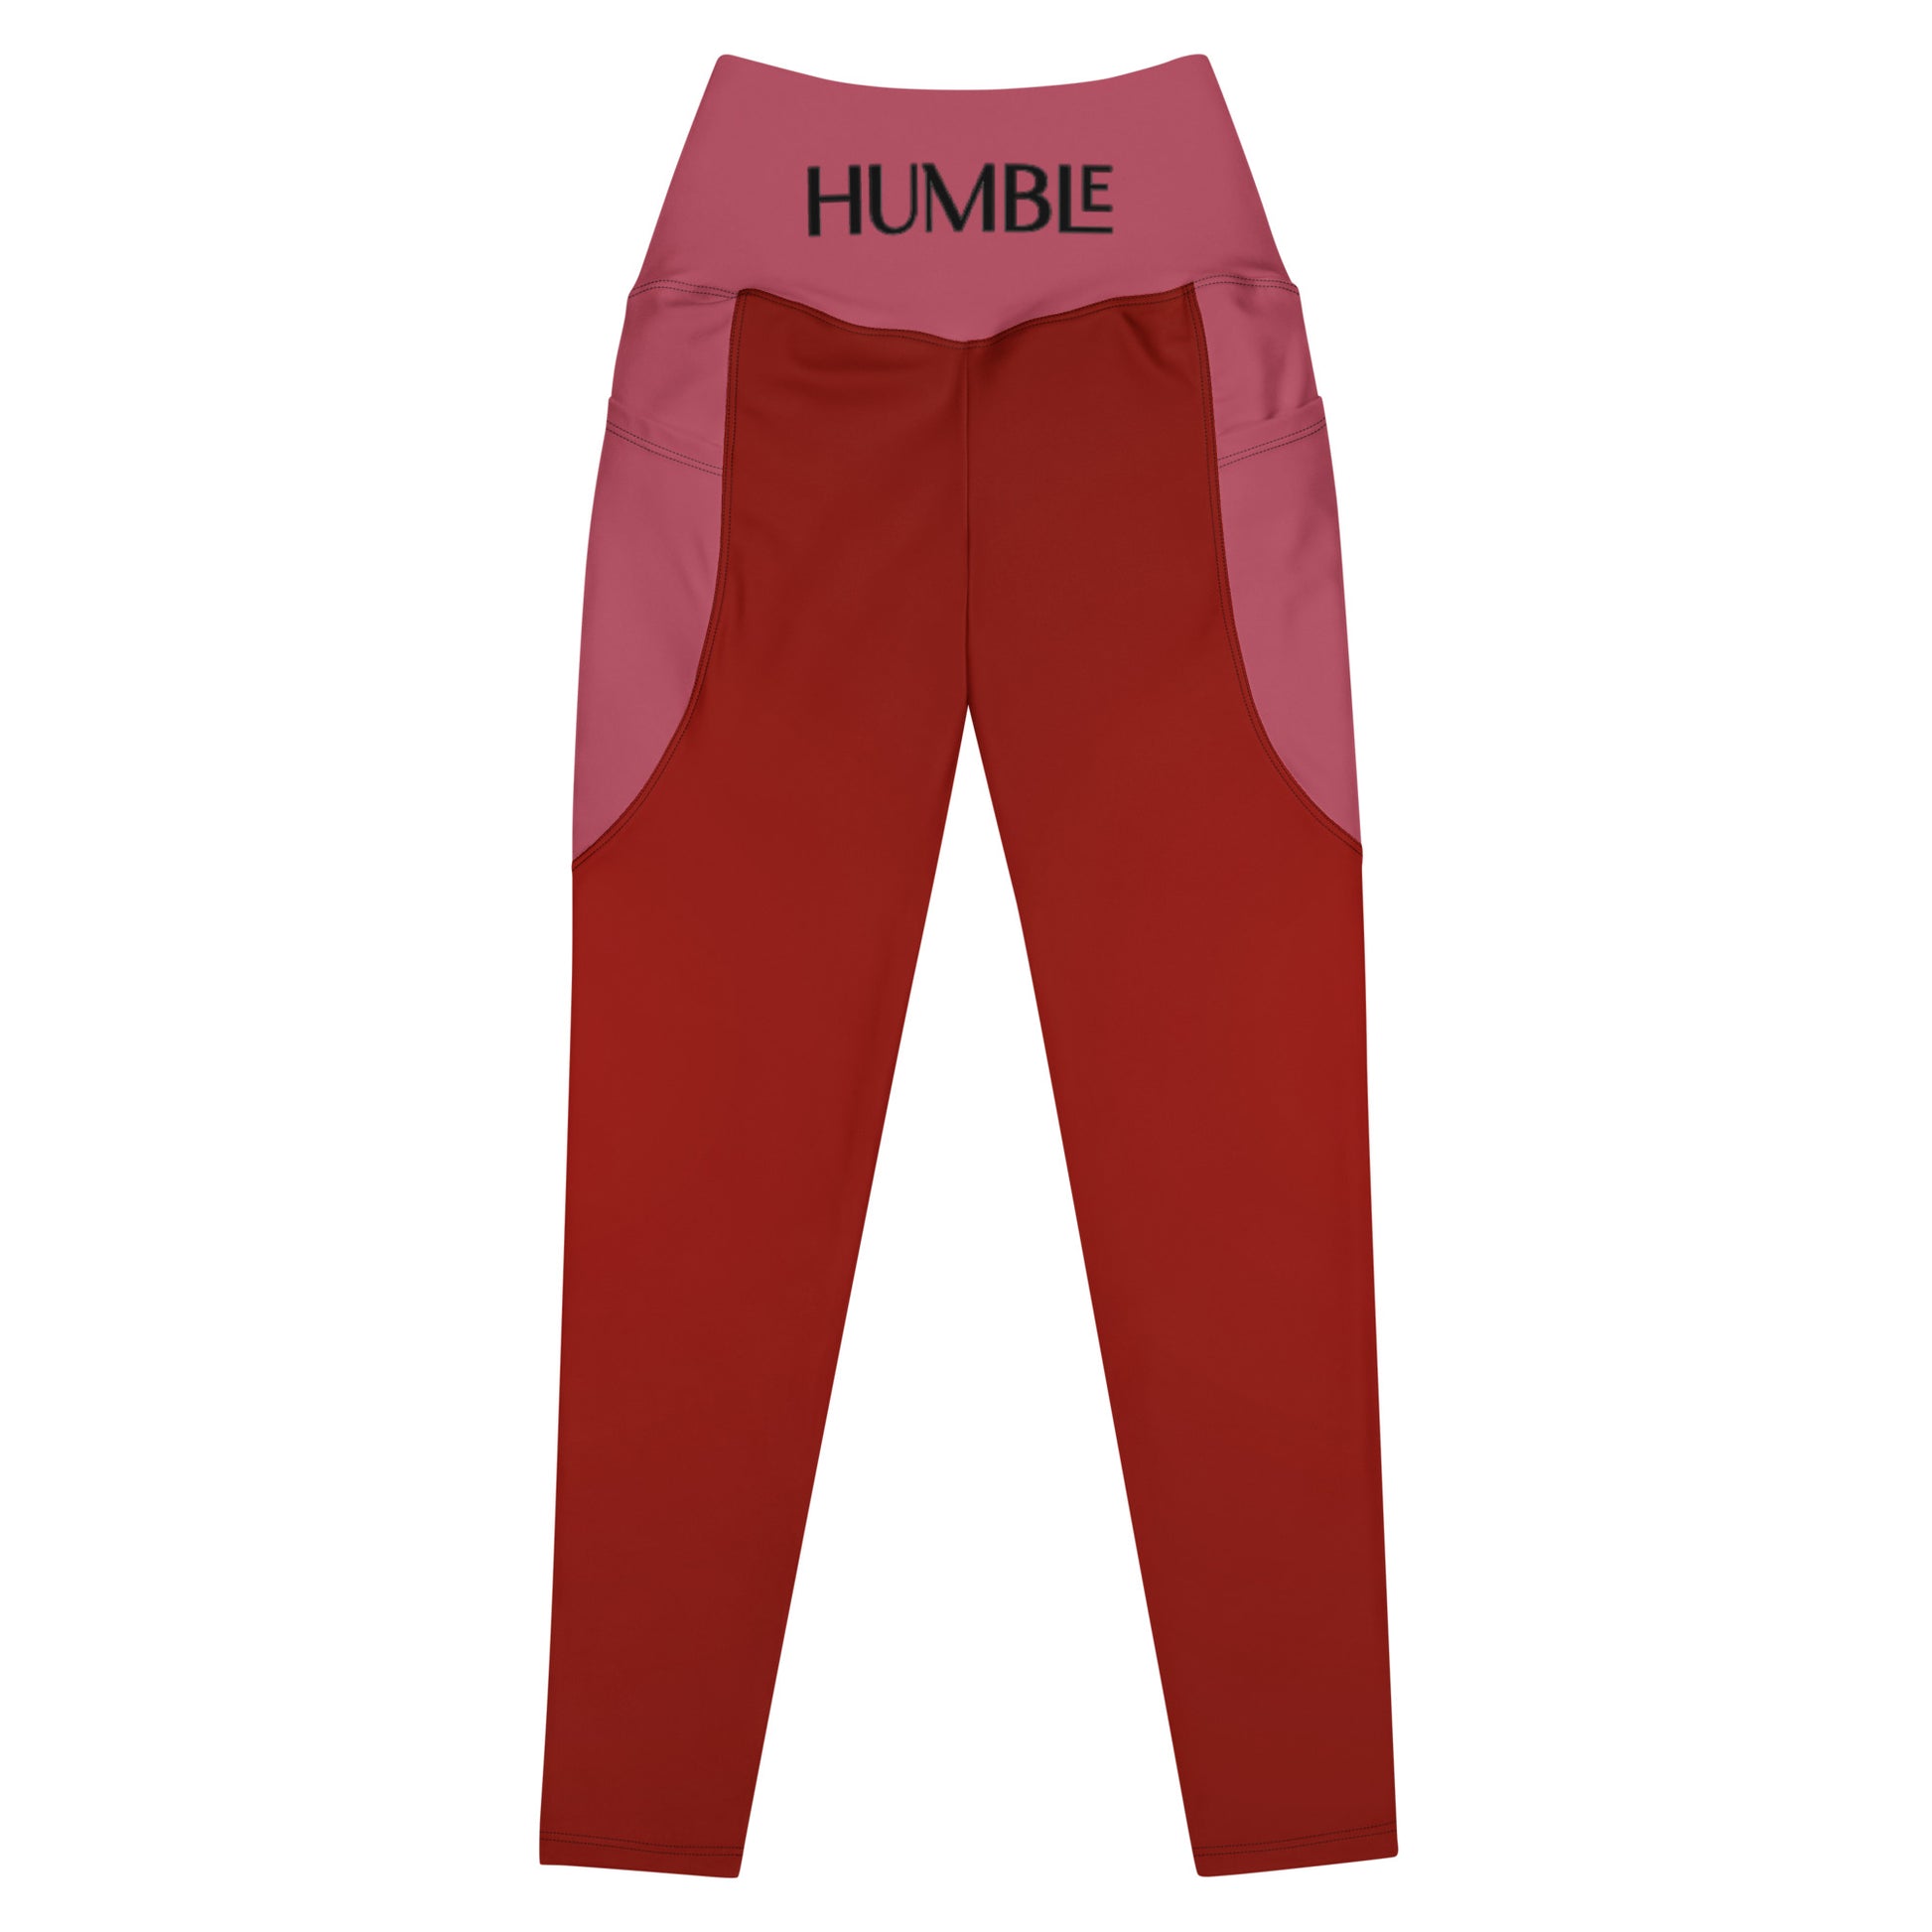 Humble Sportswear™ Women's Deep Red Active Compression Leggings - Mireille Fine Art